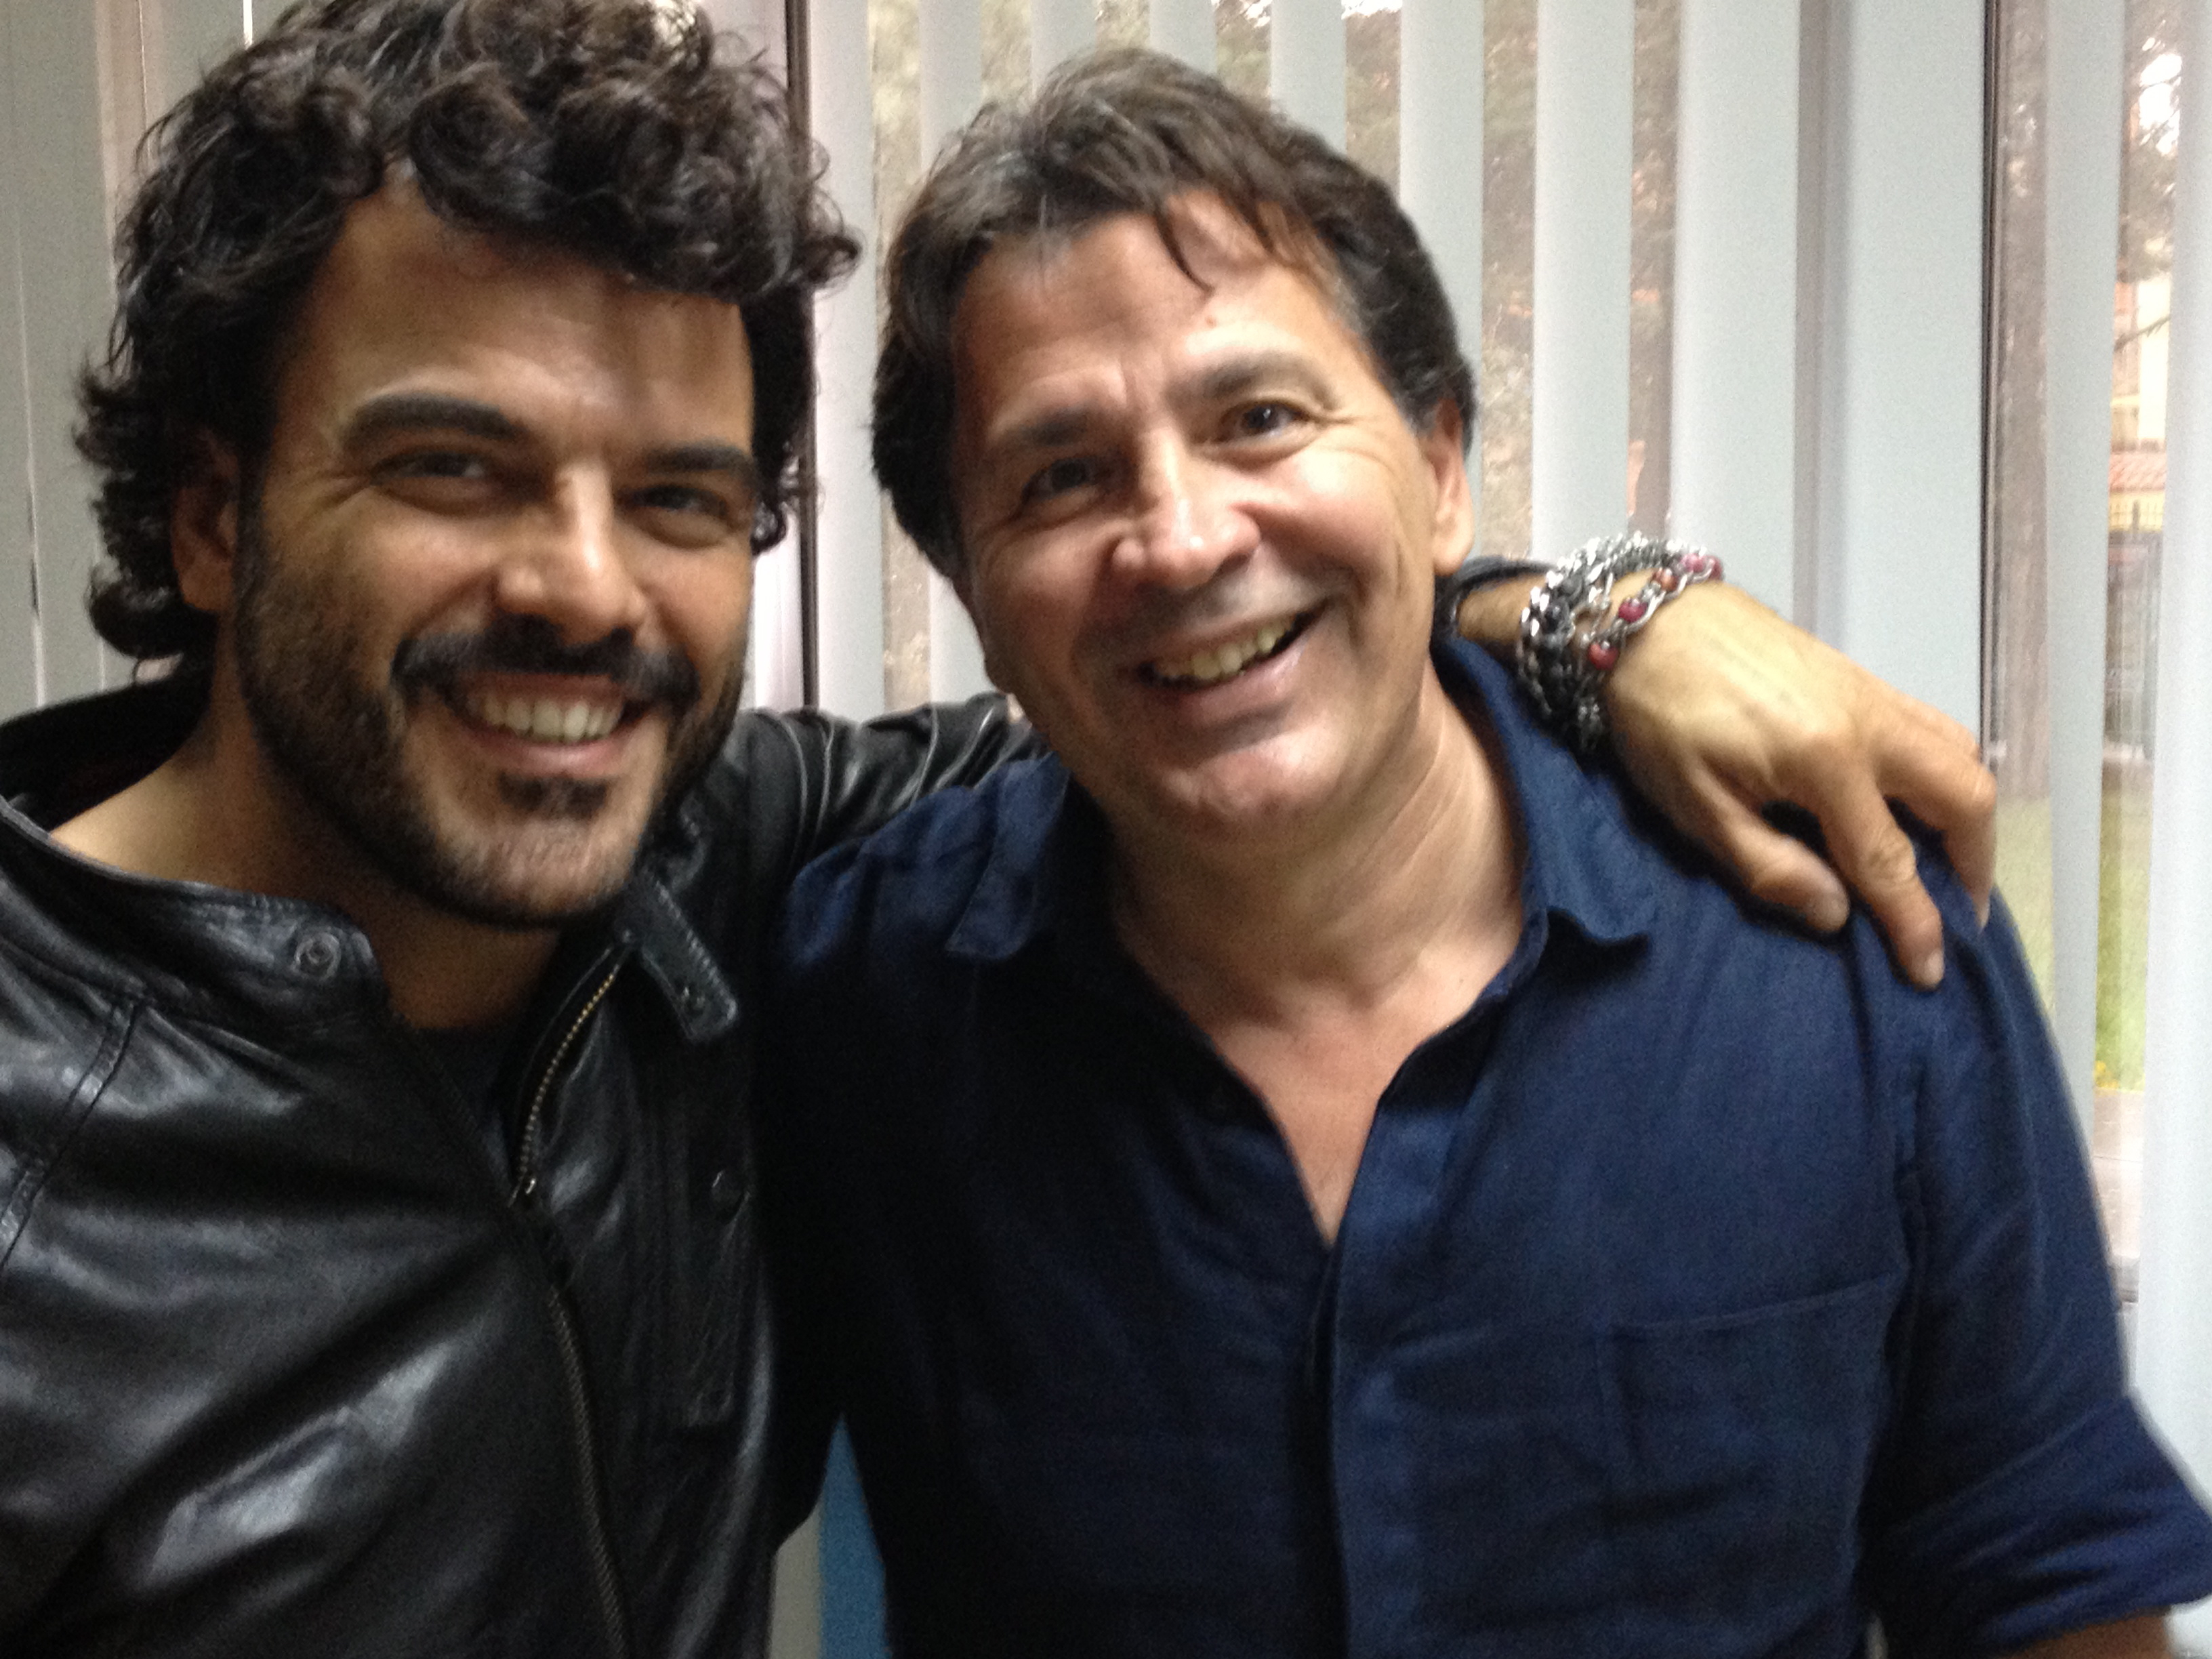 With singer Francesco Renga shooting his latest music video. 2012